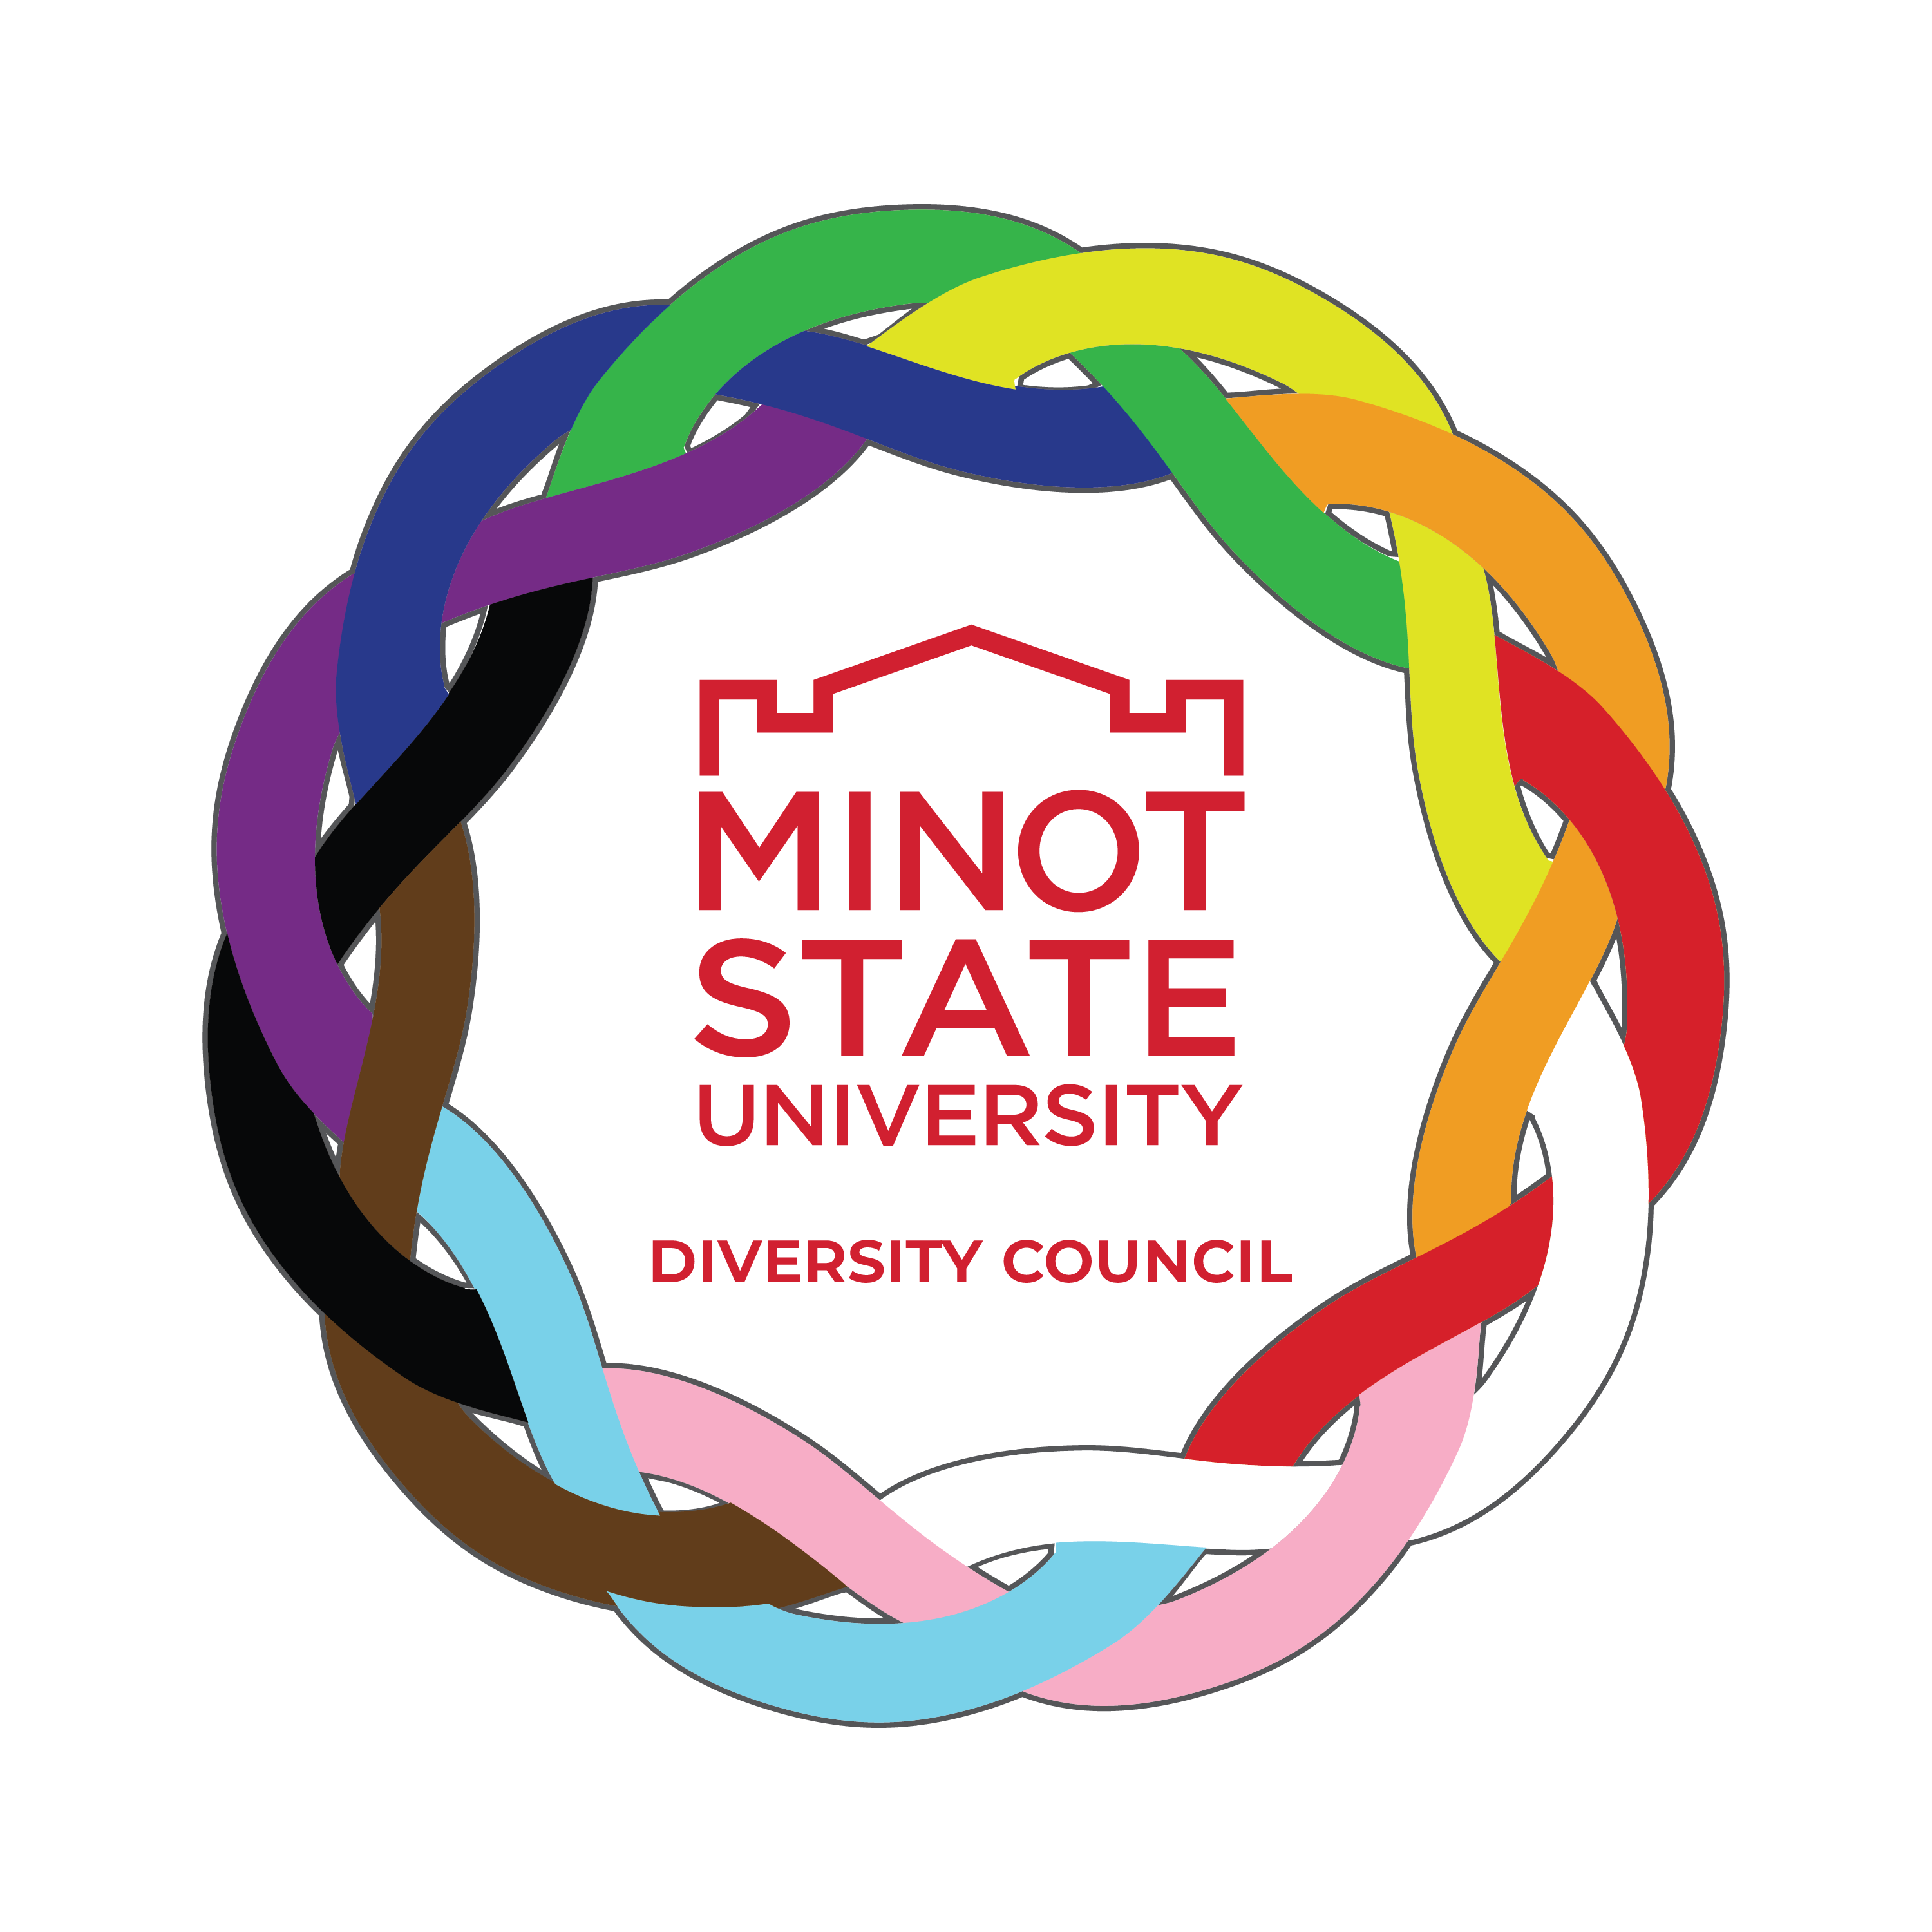 Diversity Council logo